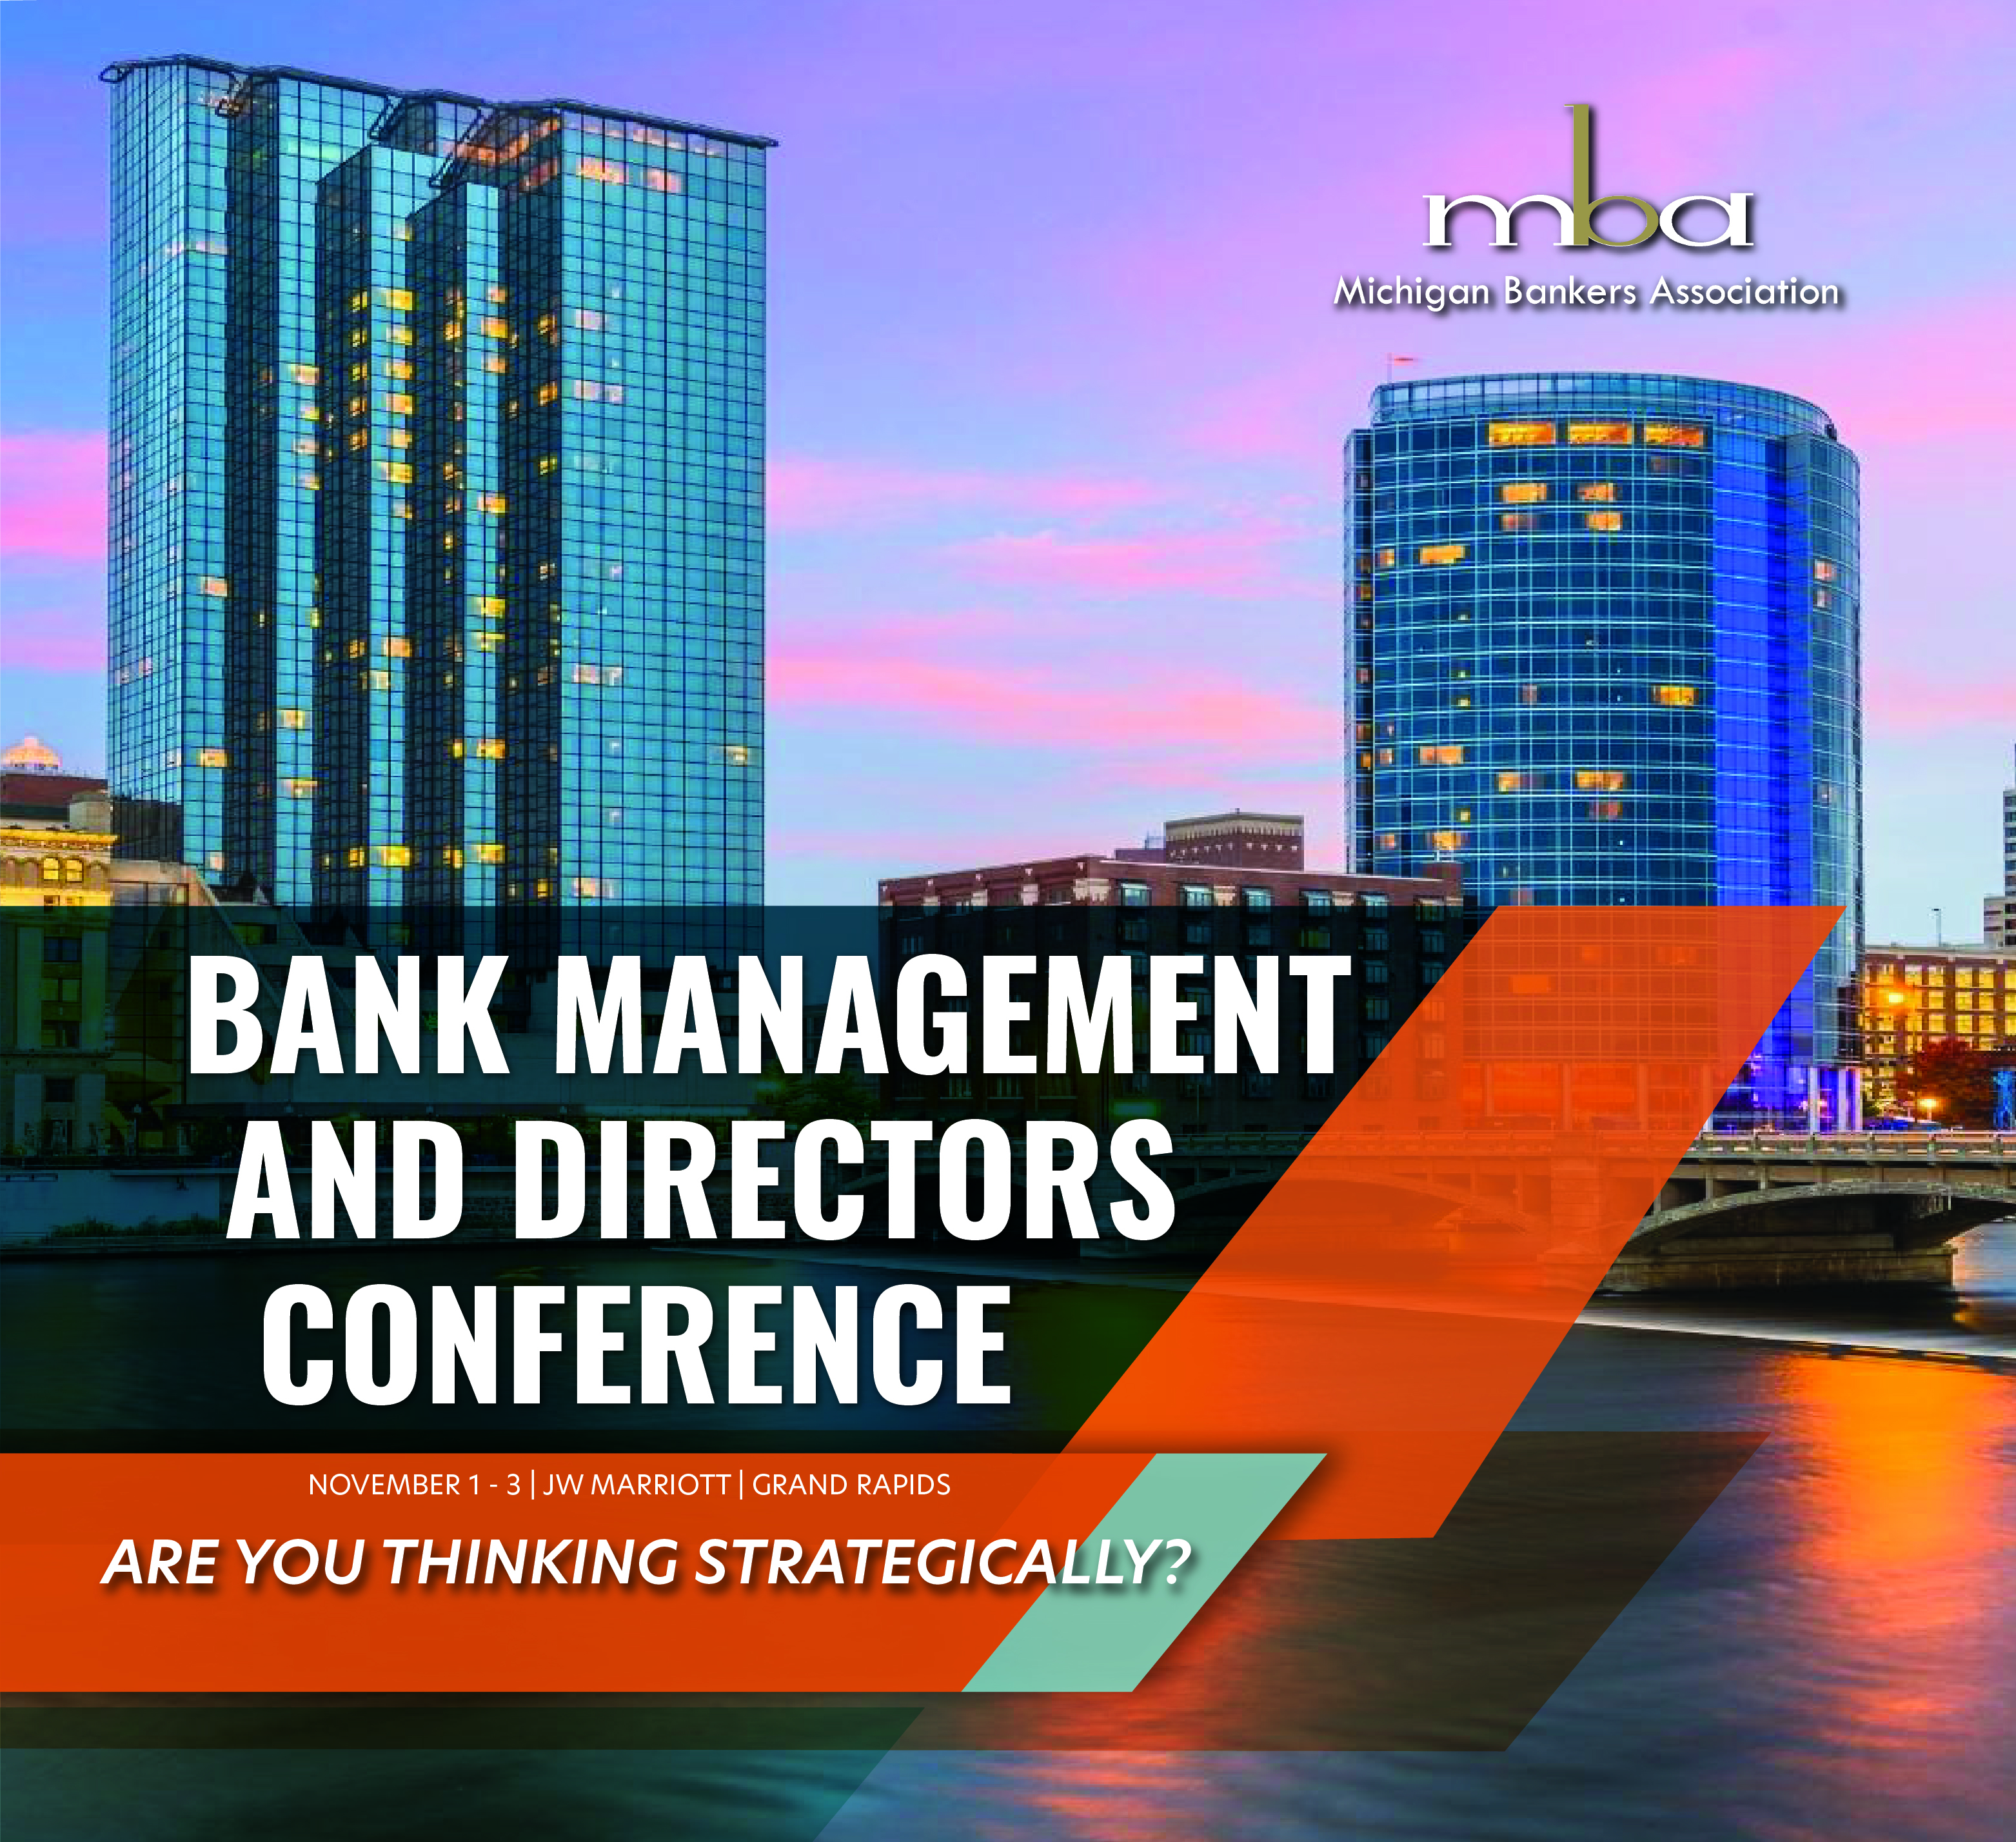 Bank Management Conference 11/1-11/3/22